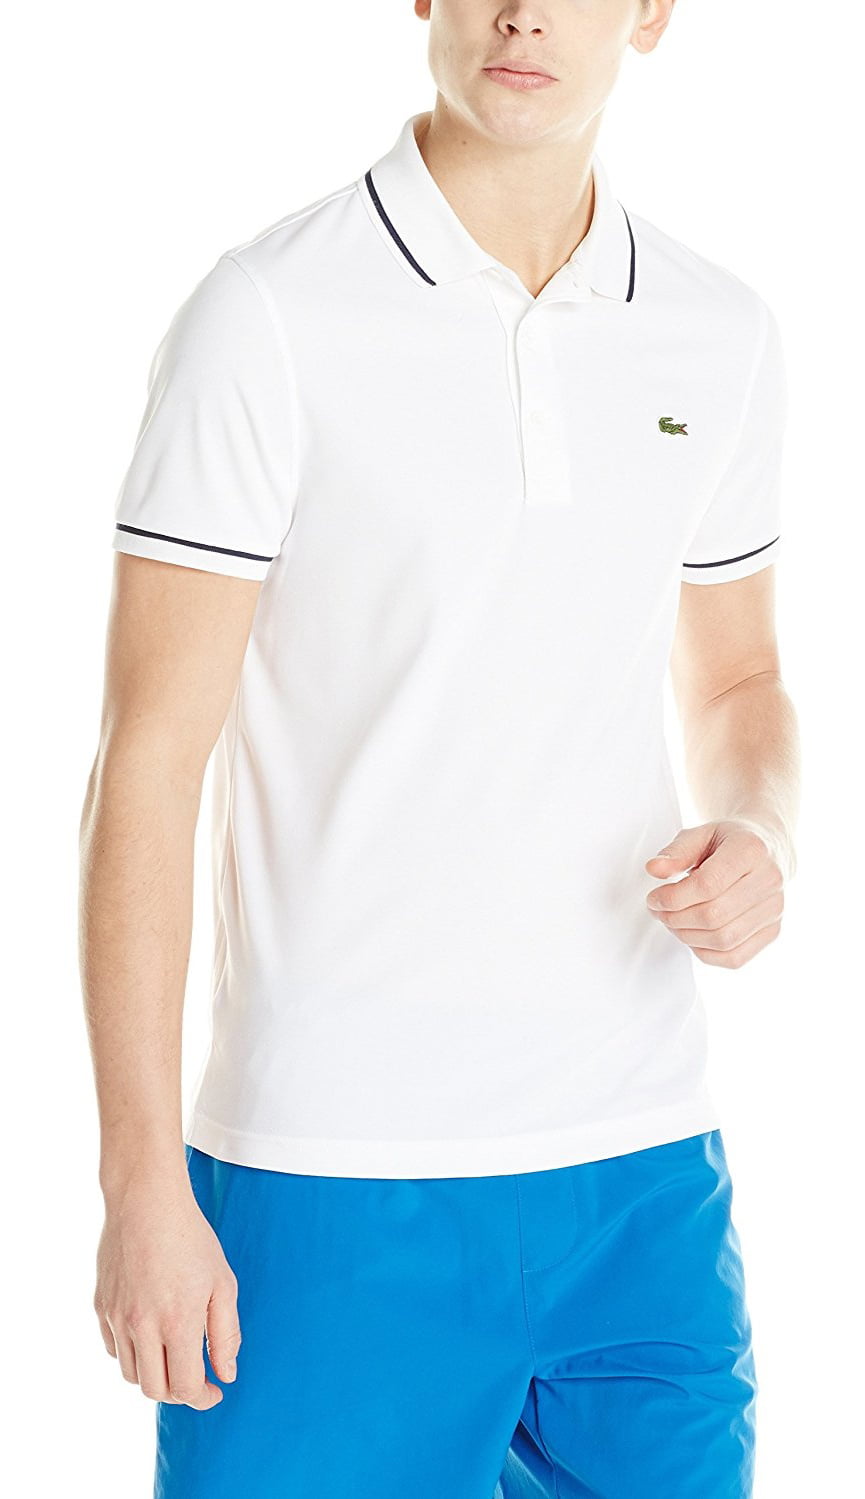 lacoste men's sport short sleeve ultra fancy polo shirt,6, white/navy blue - Walmart.com